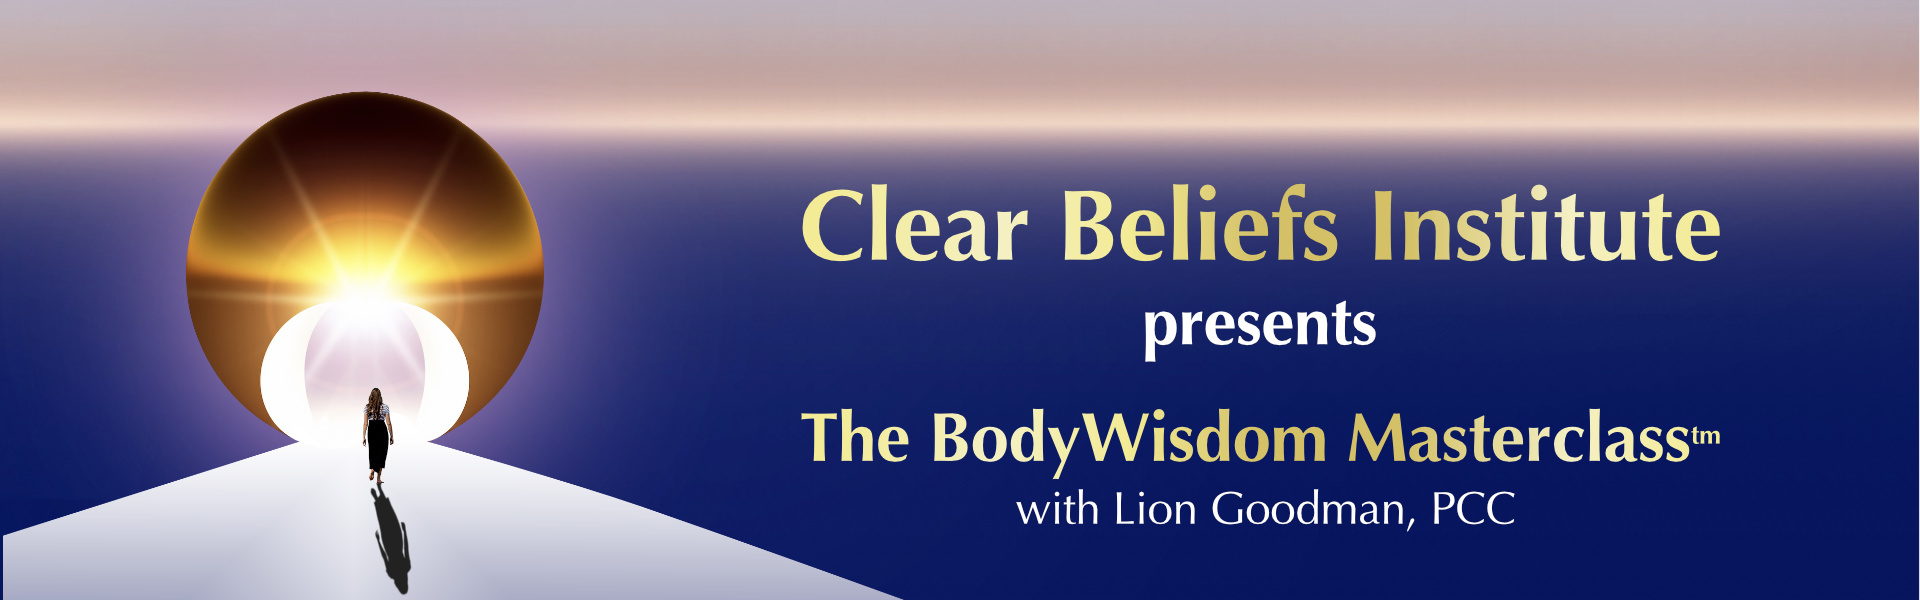 Clear Beliefs Institutes Presents